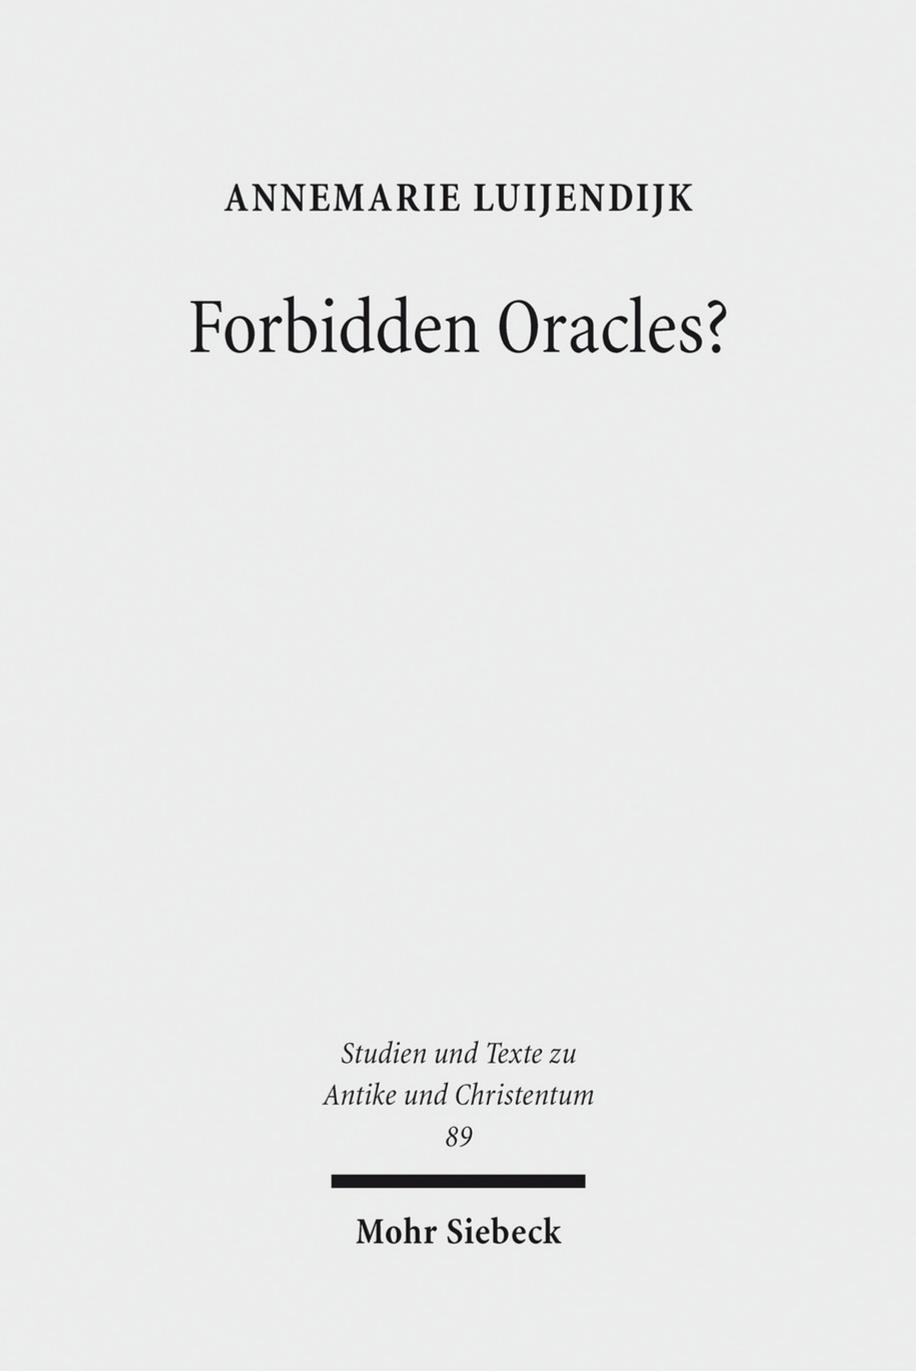 Forbidden Oracles?: The Gospel of the Lots of Mary by Annemarie Luijendijk